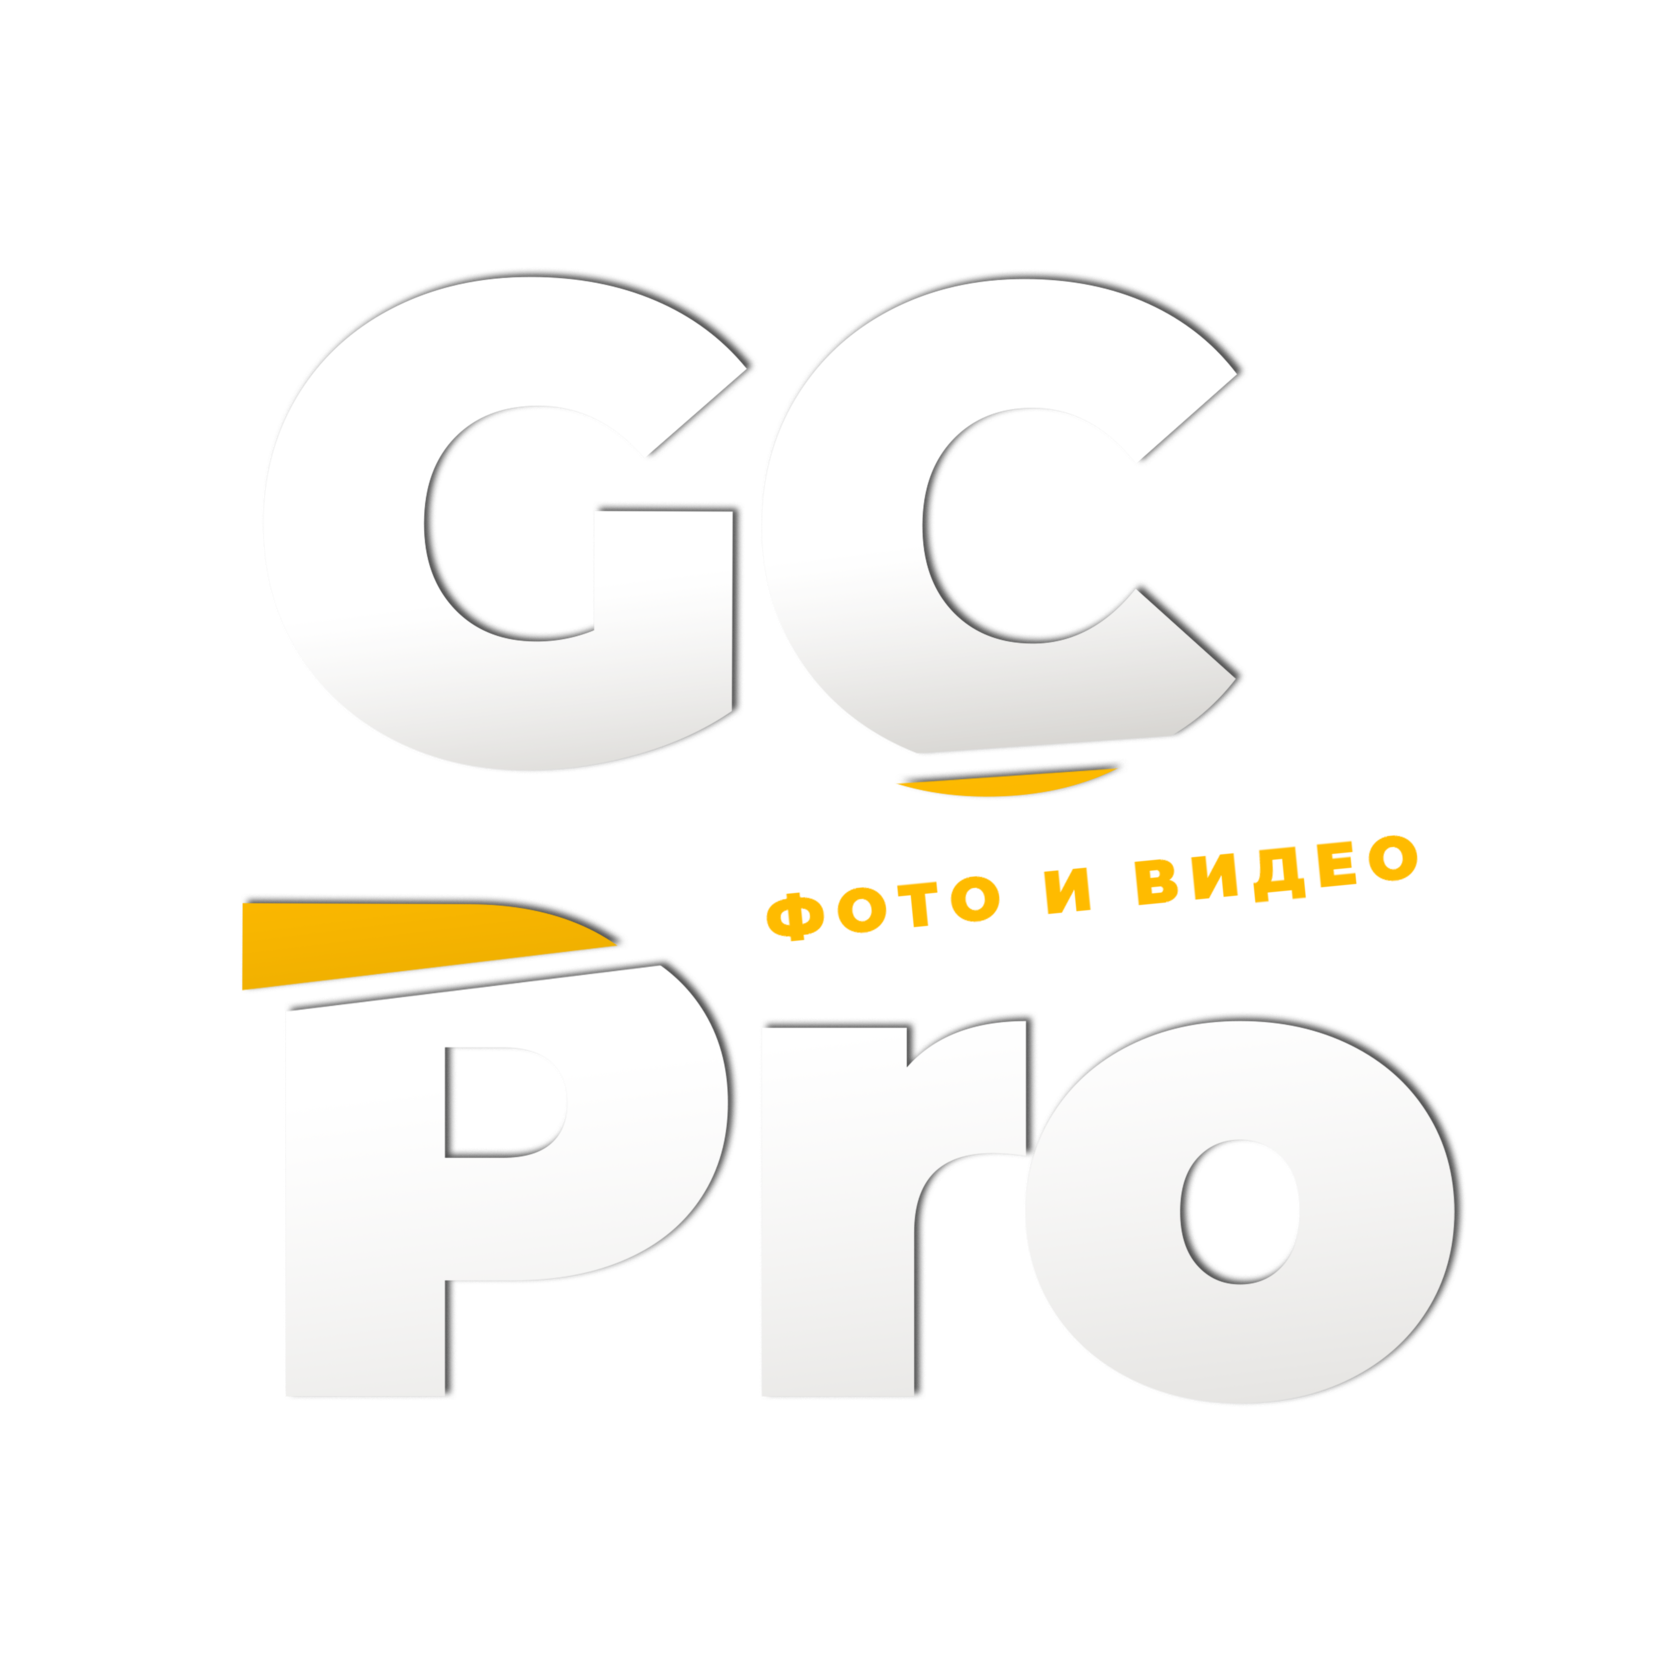   G.C.PRO  